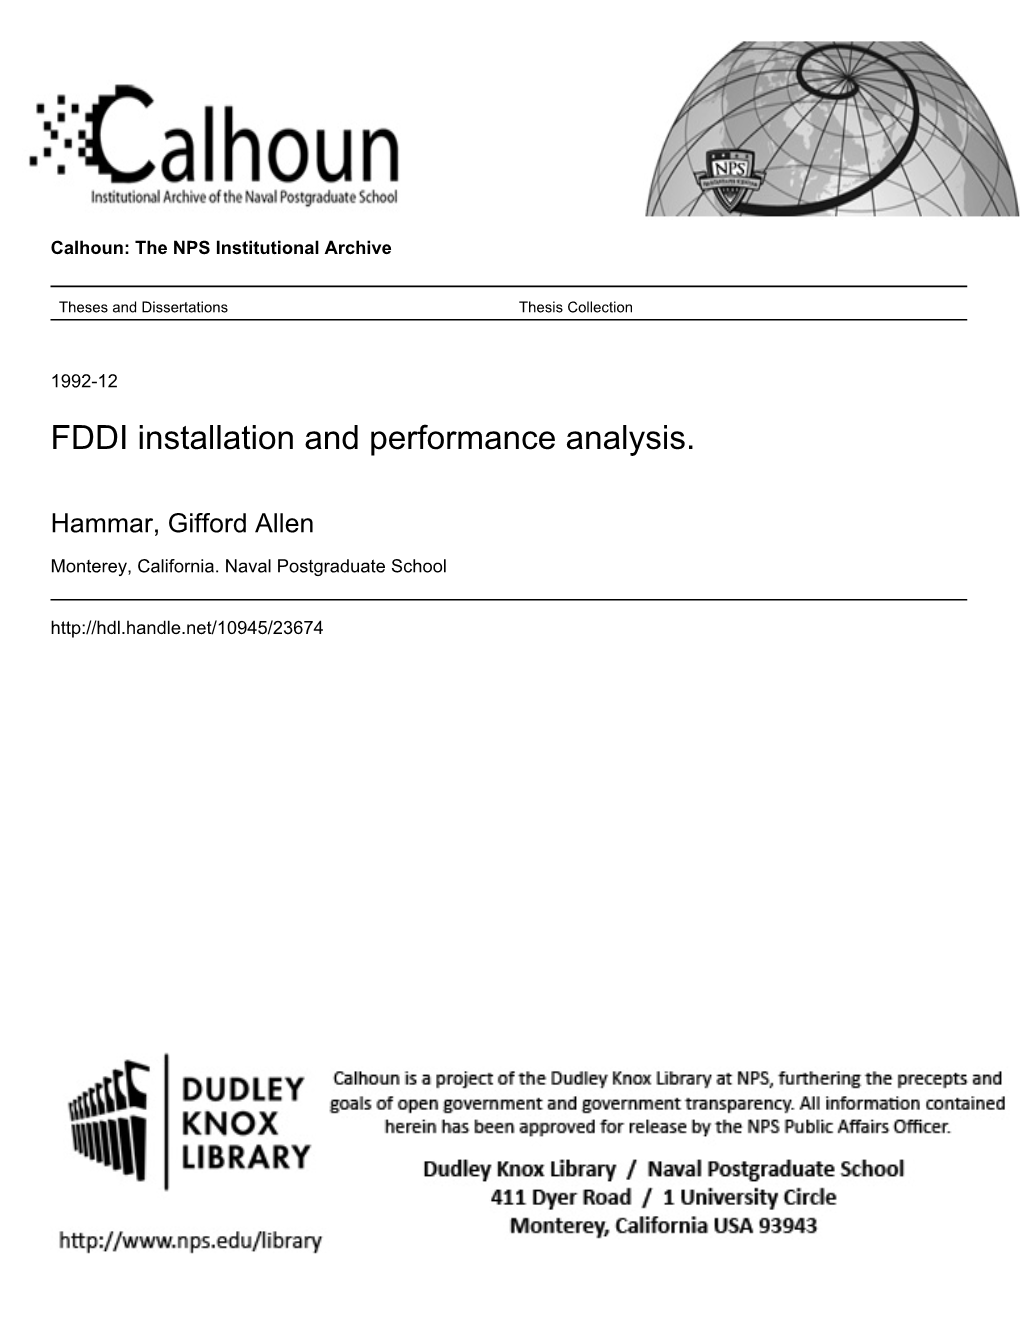 FDDI Installation and Performance Analysis